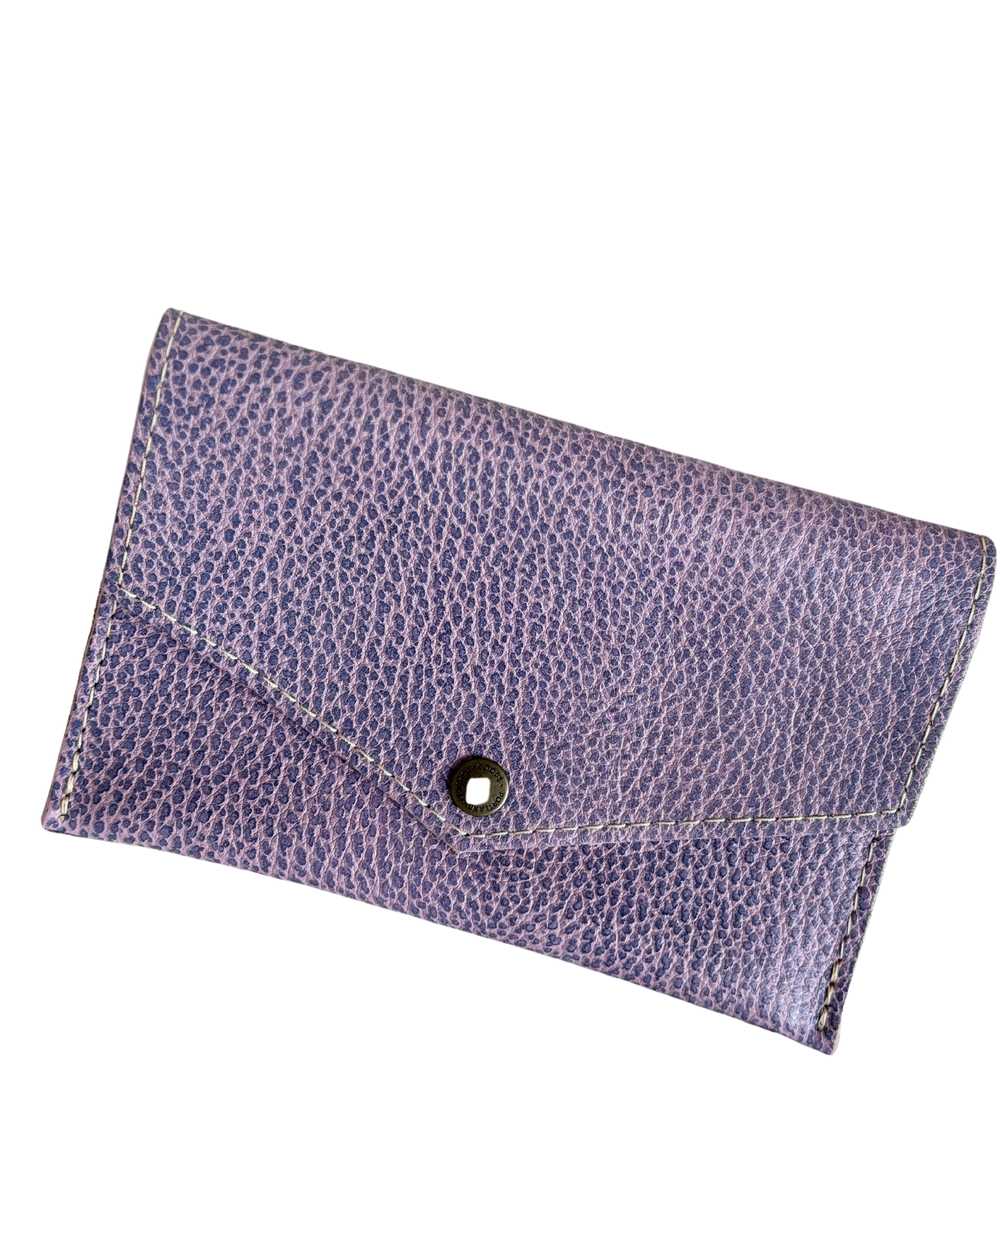 Portland Leather Lilac Envelope - image 1